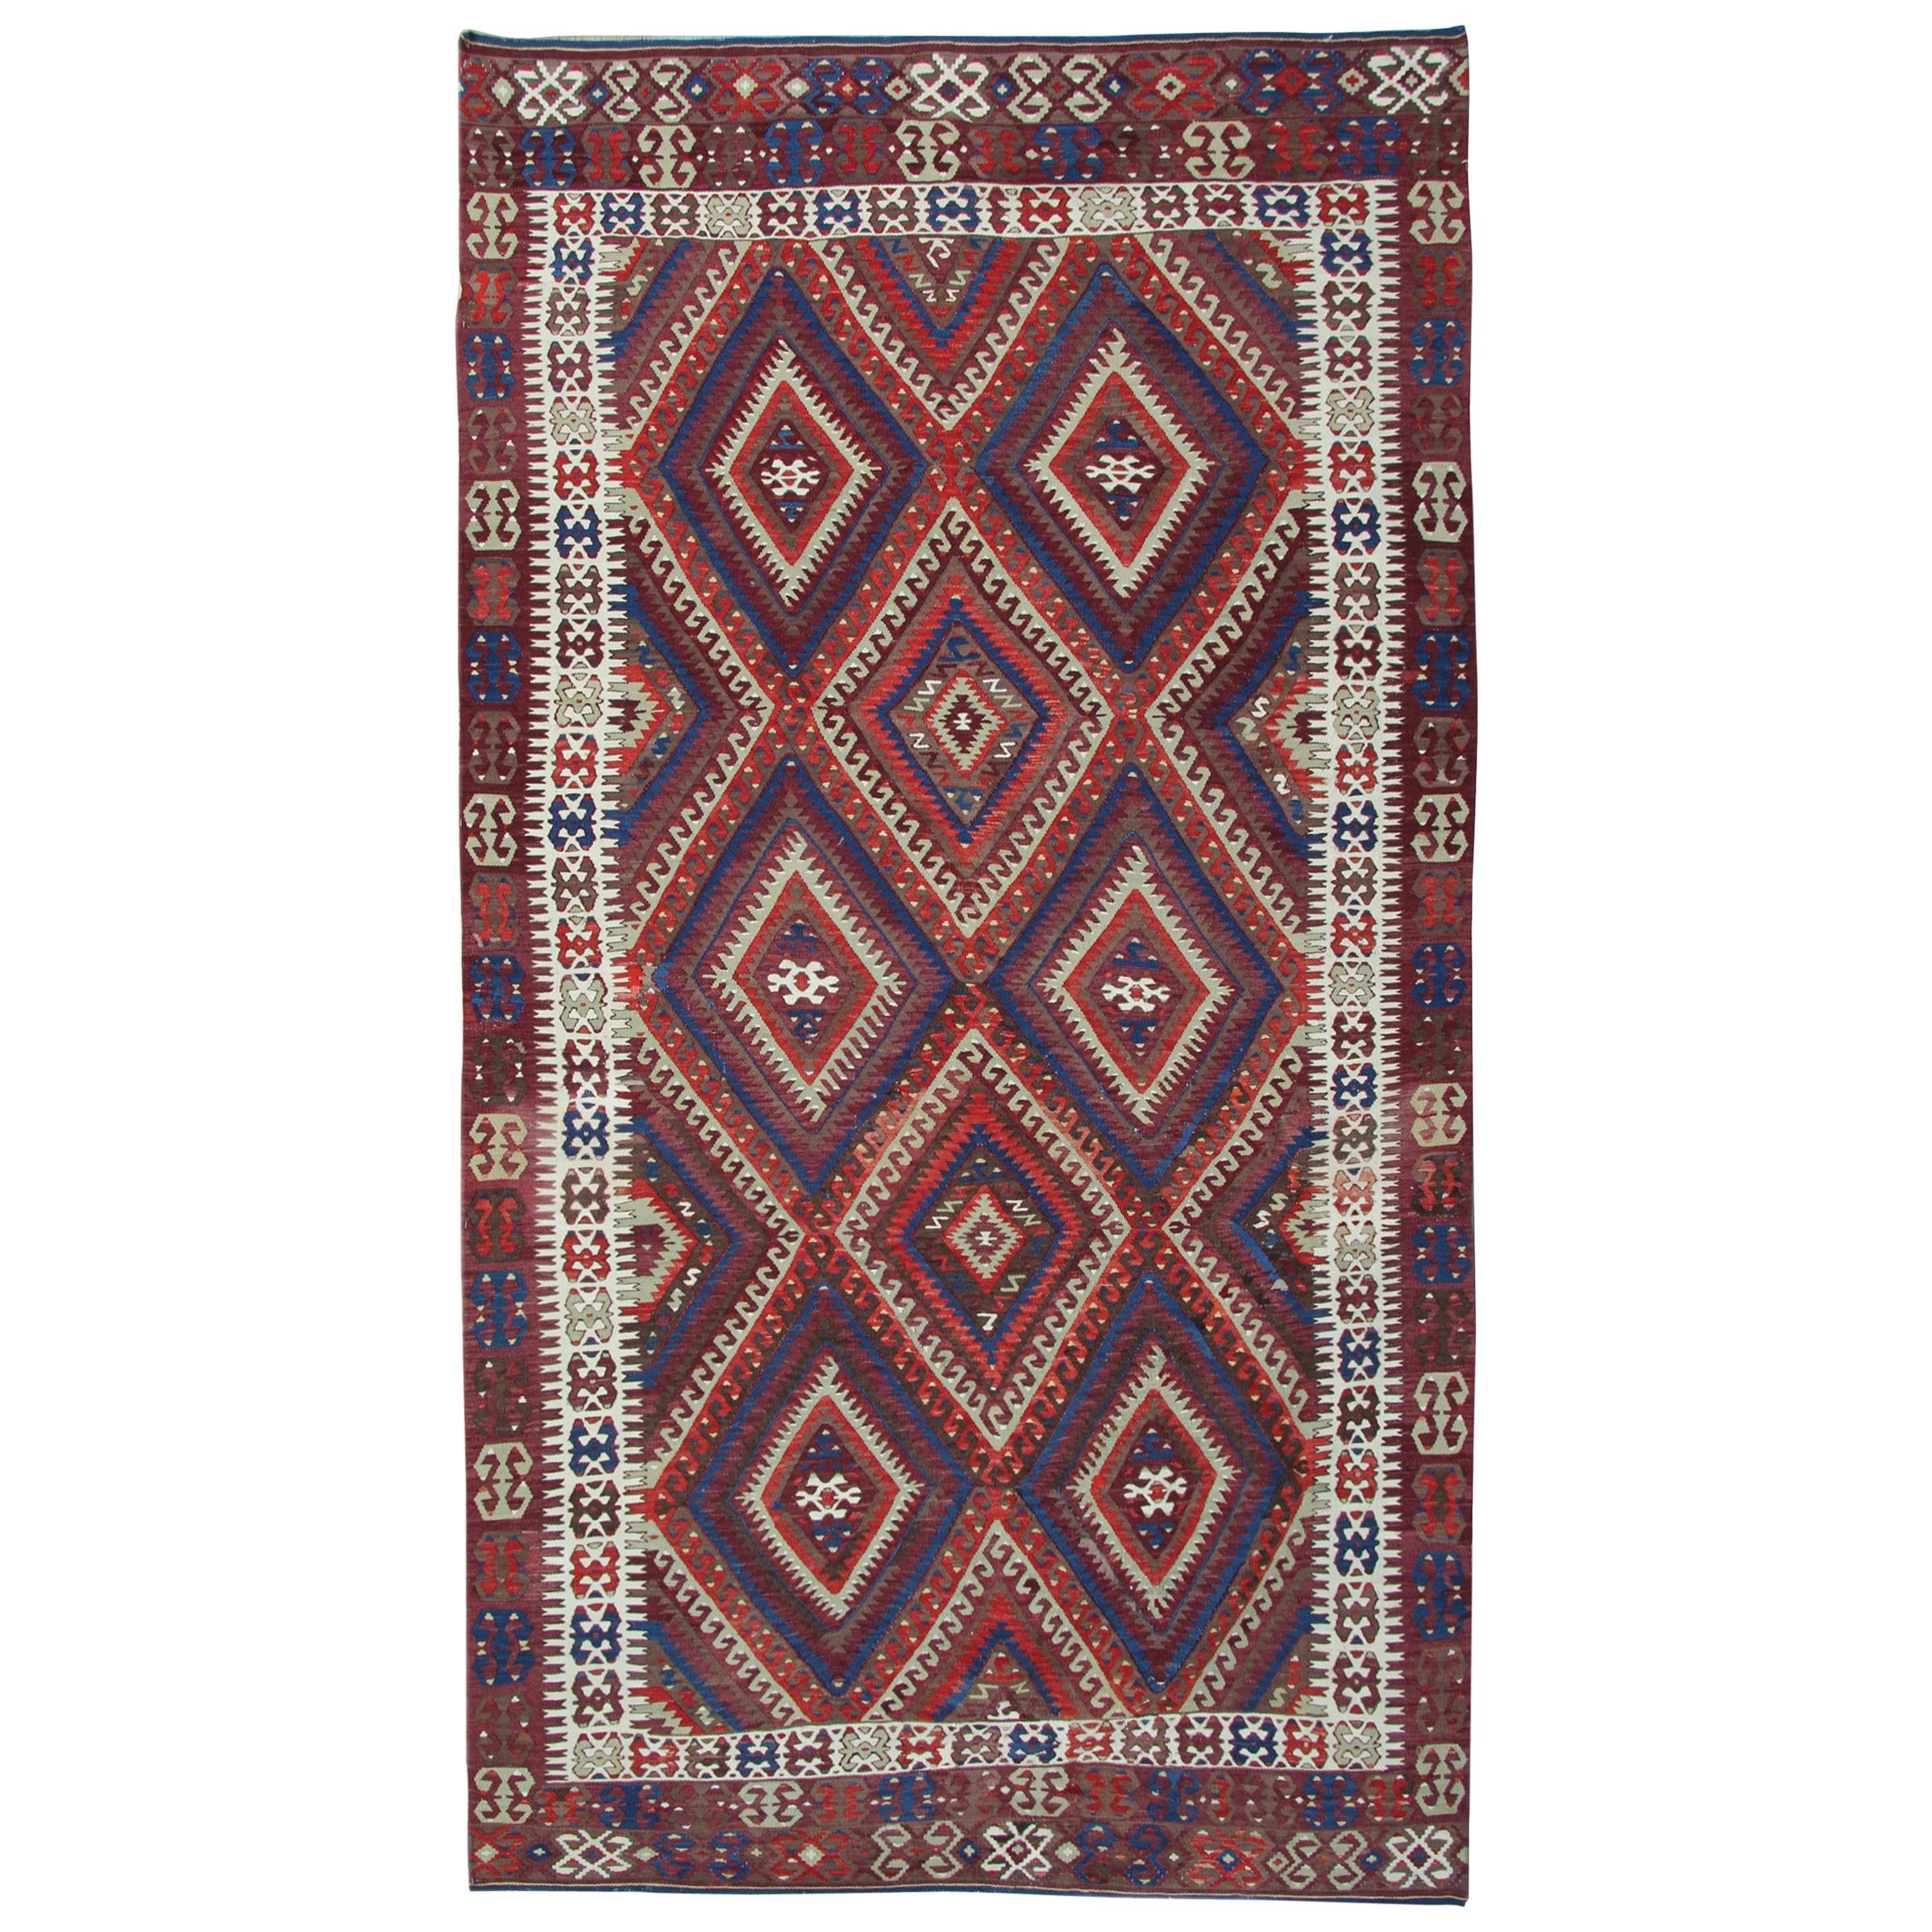 Antique Rugs, Anatolian Turkish Kilim Rugs, Turkish Carpet from Anatolia For Sale